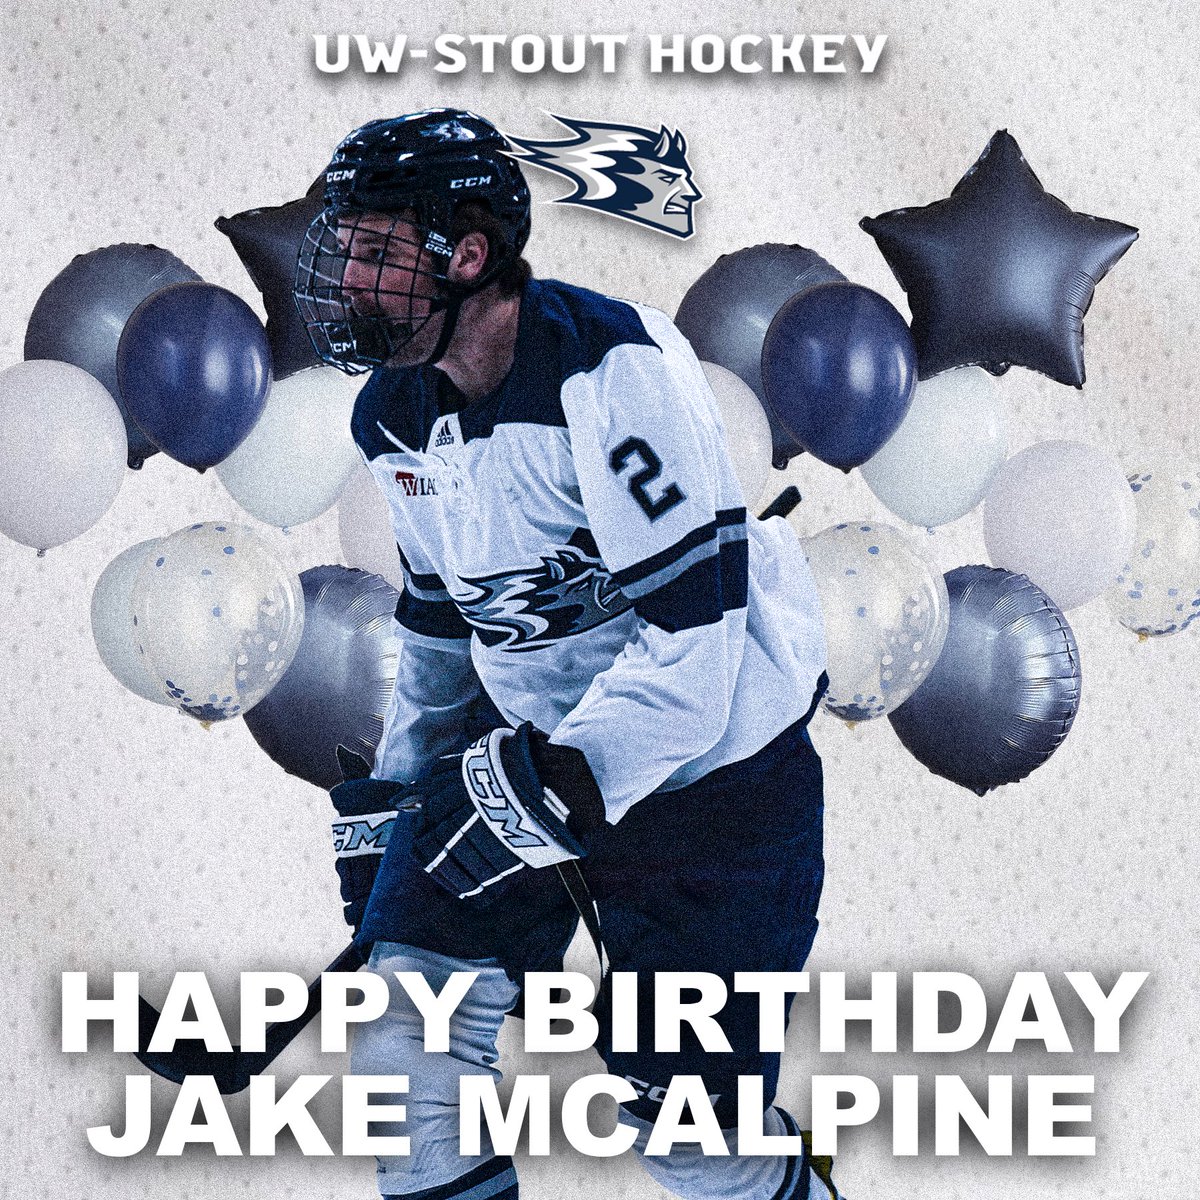 Happy birthday to #2 Jake McAlpine!! Enjoy your day 🥳

#UWStout #CollegeHockey #BleedBlue